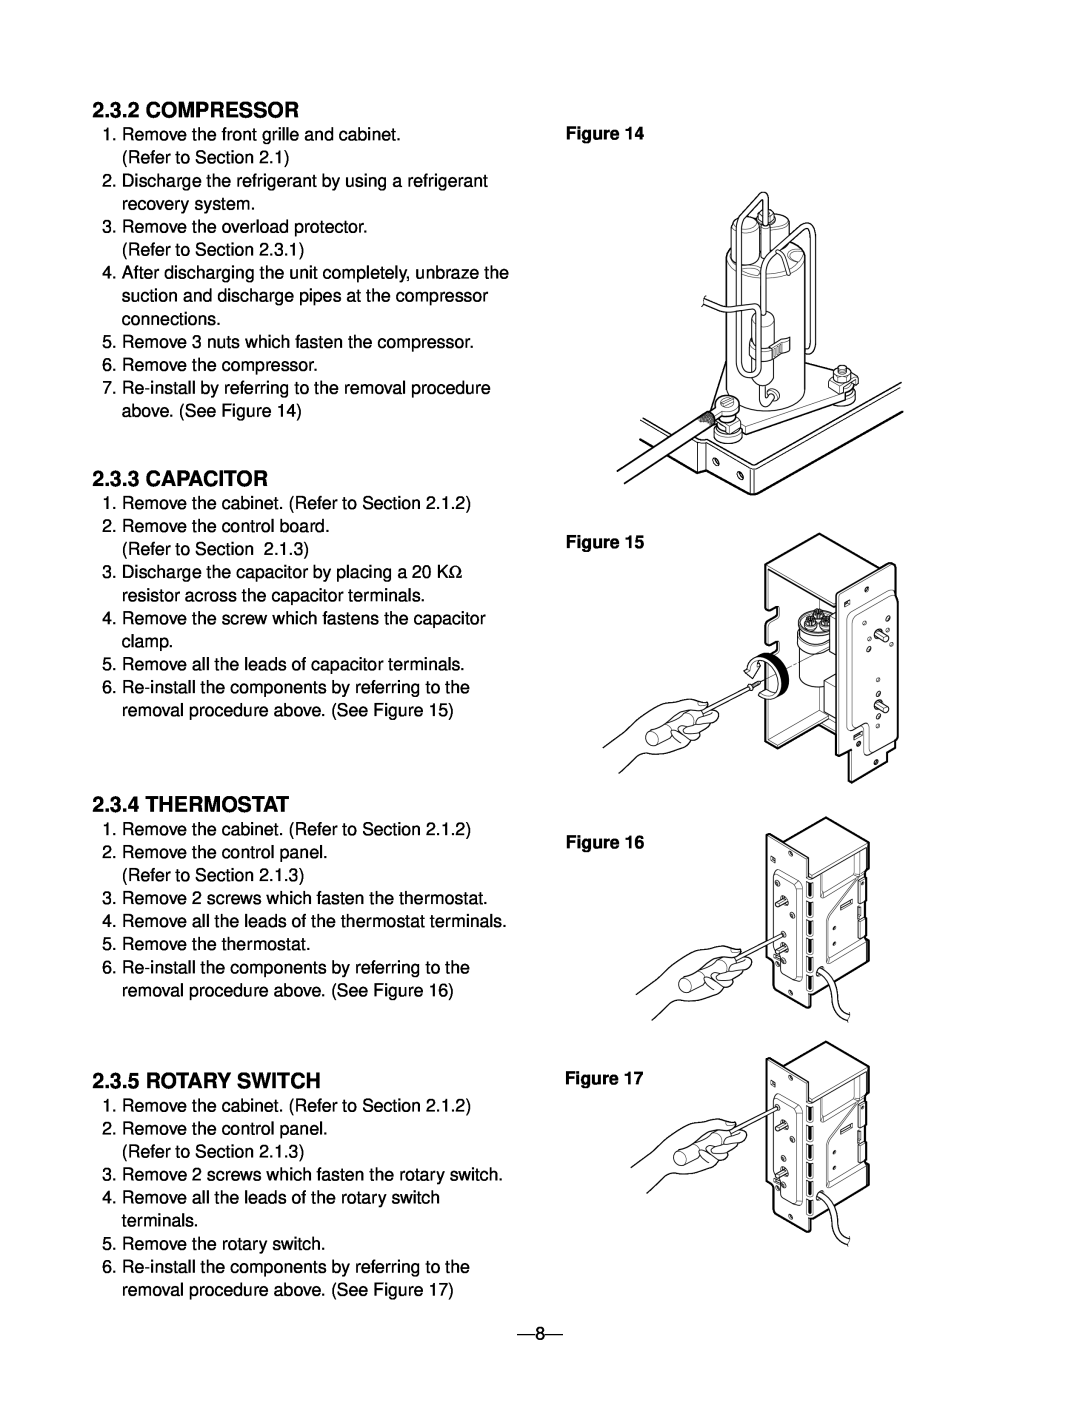 Friedrich ZQ05C10 manual Compressor, Capacitor, Thermostat, Rotary Switch, Figure Figure 